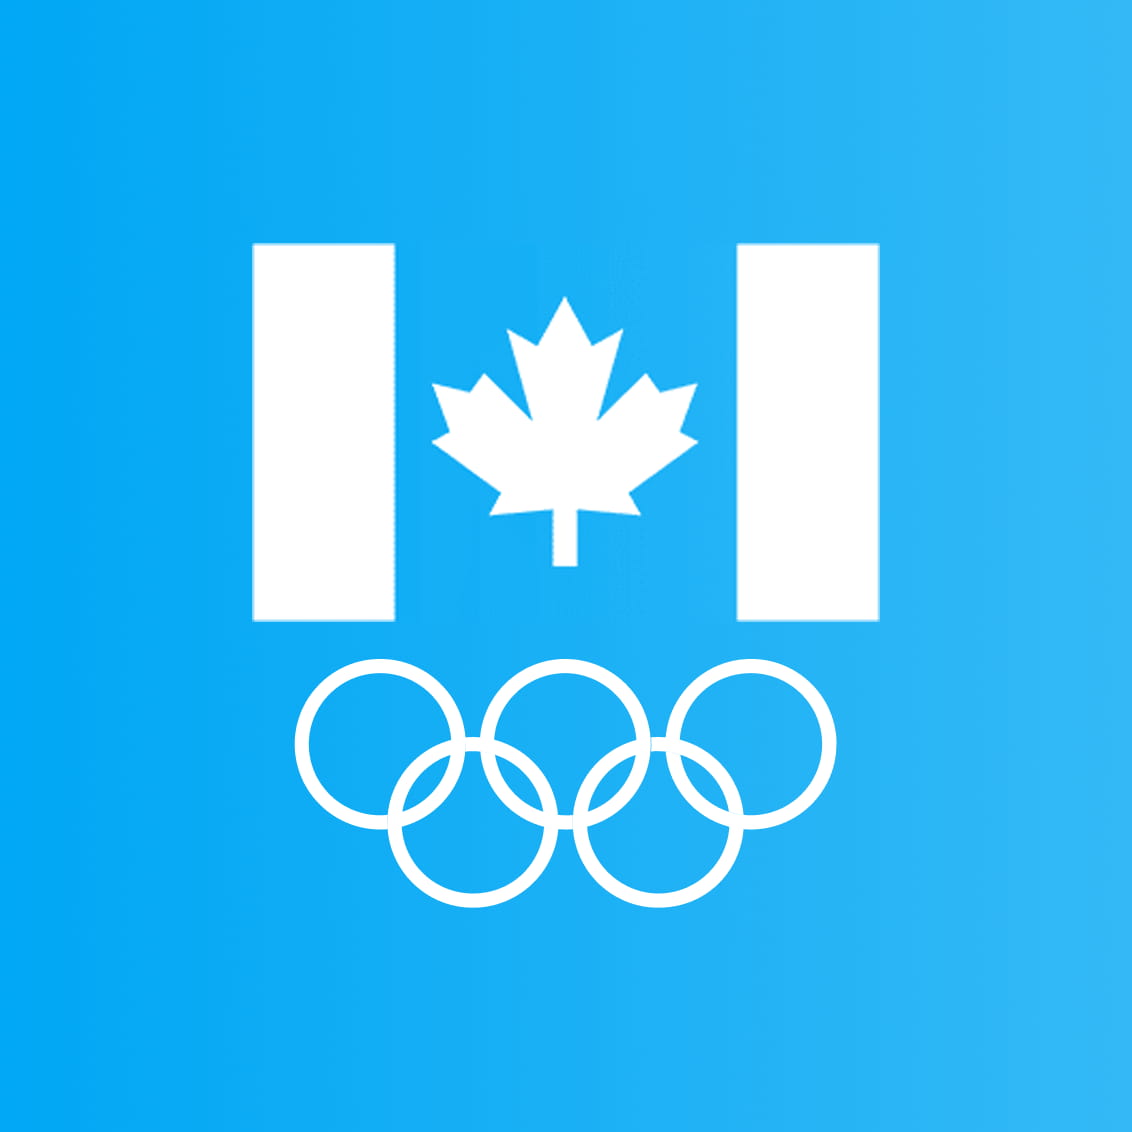 Équipe Canada logo